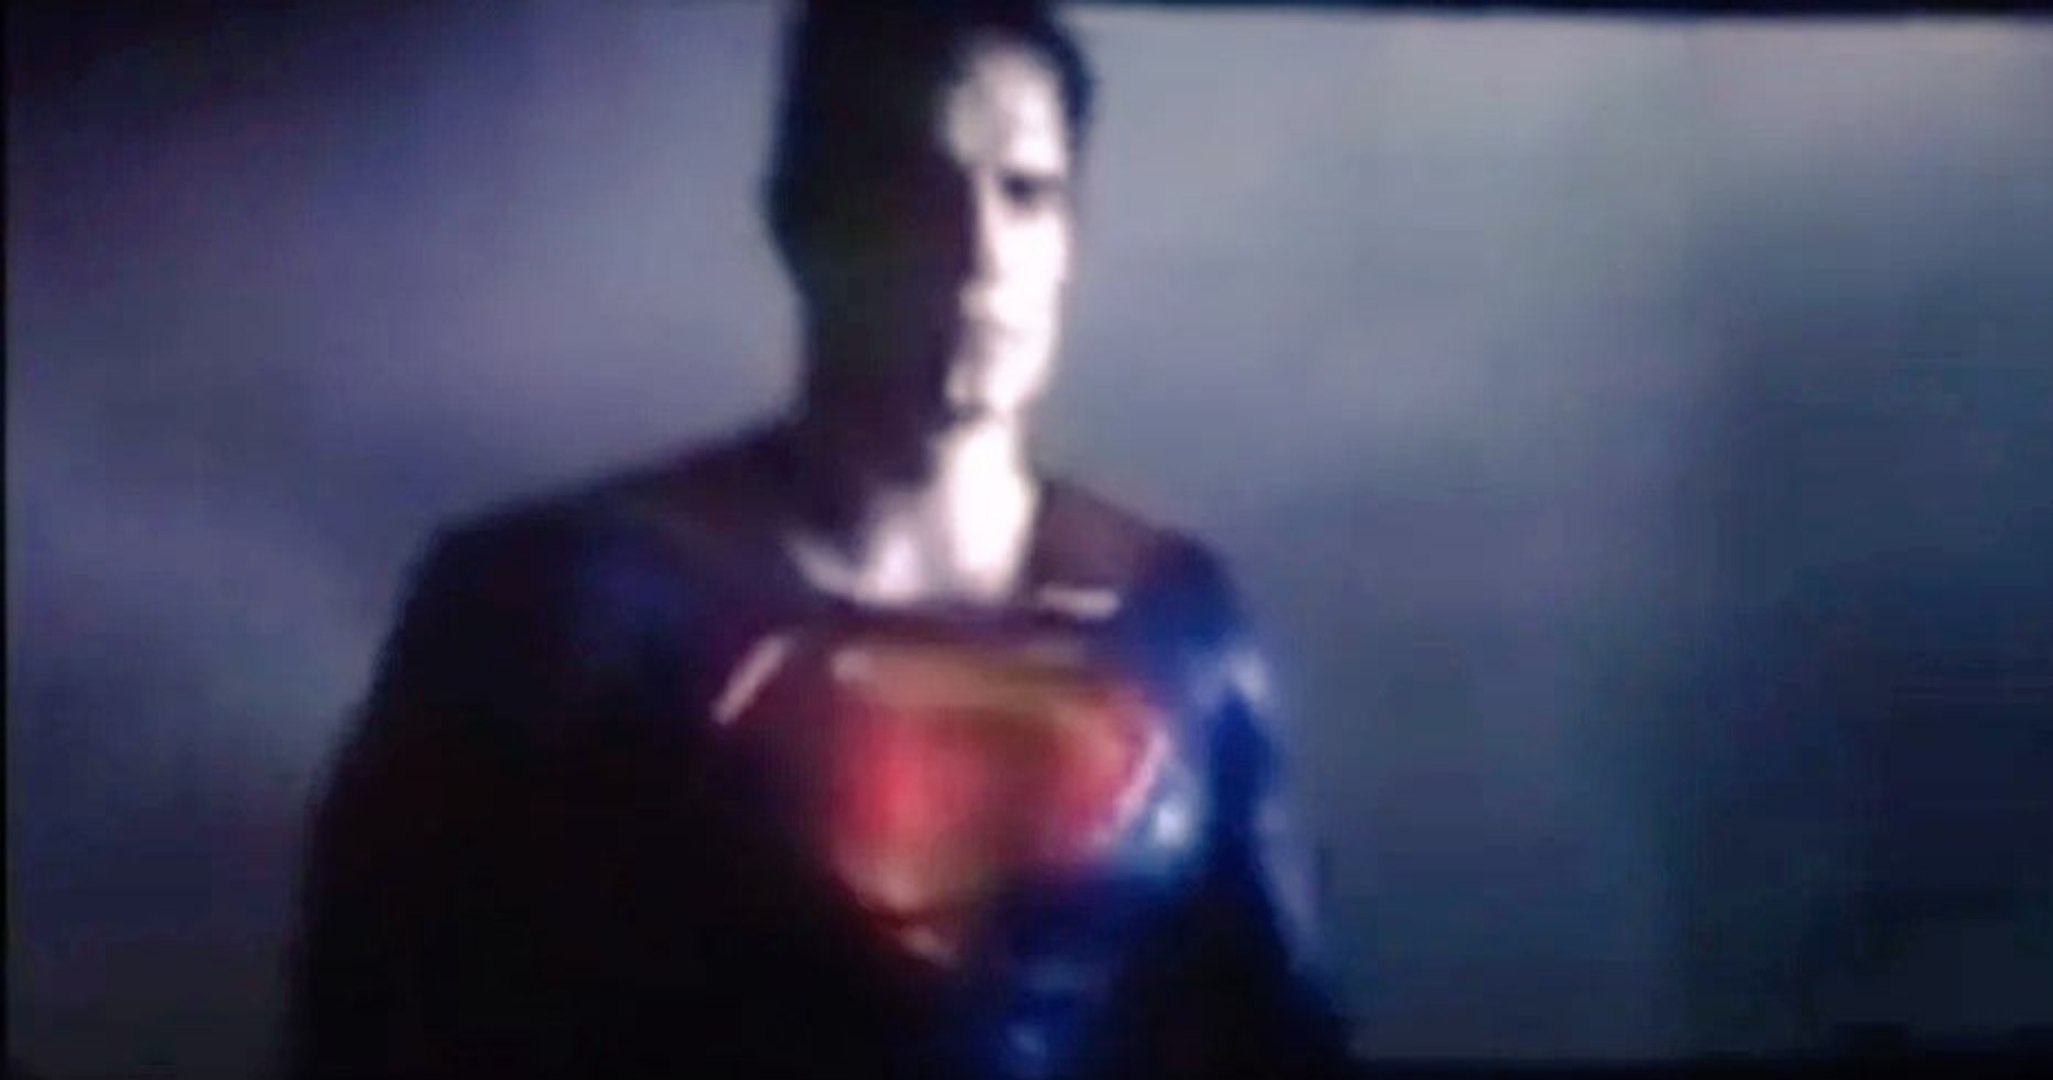 Will There Be a Black Adam vs. Superman Movie?